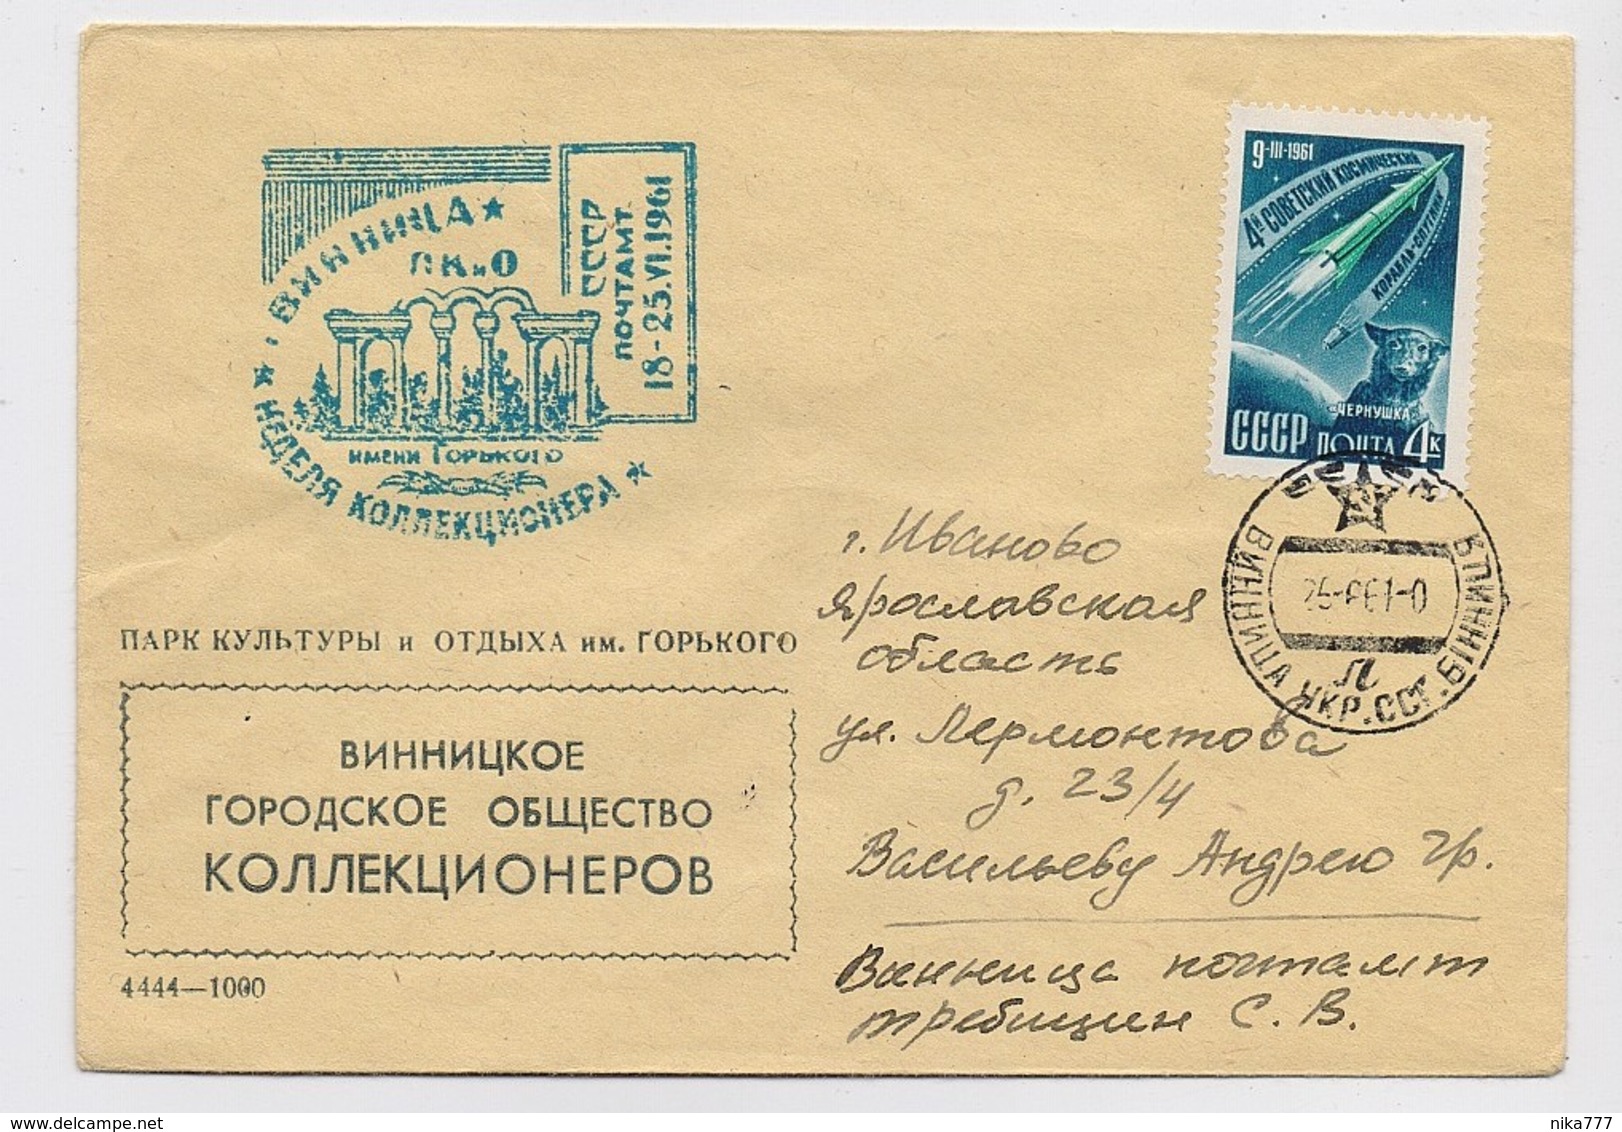 MAIL Post Cover Mail USSR RUSSIA Space Rocket Sputnik Dog Vinnytsia Ukraine - Covers & Documents